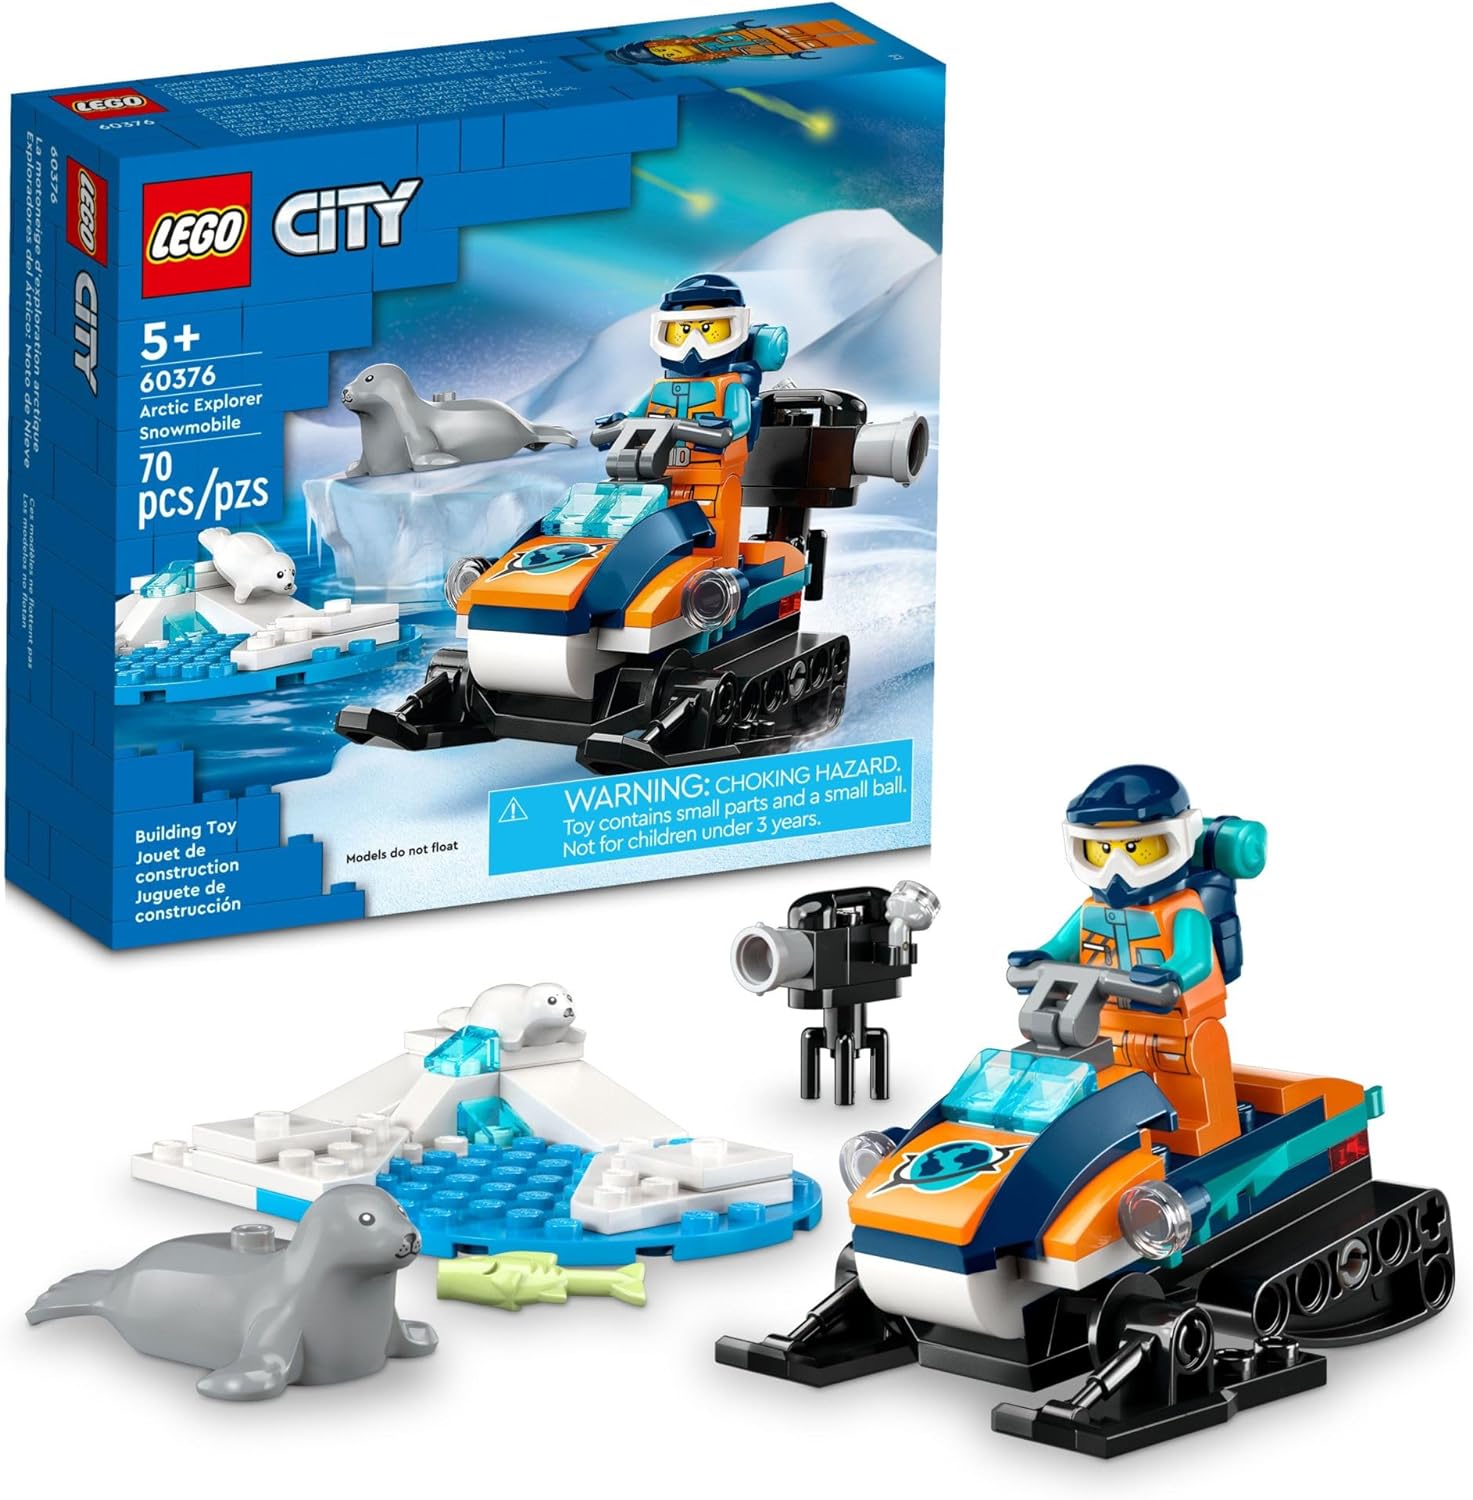 70-Piece LEGO City Arctic Explorer Snowmobile $5.50 + Free S&H w/ Prime or $35+